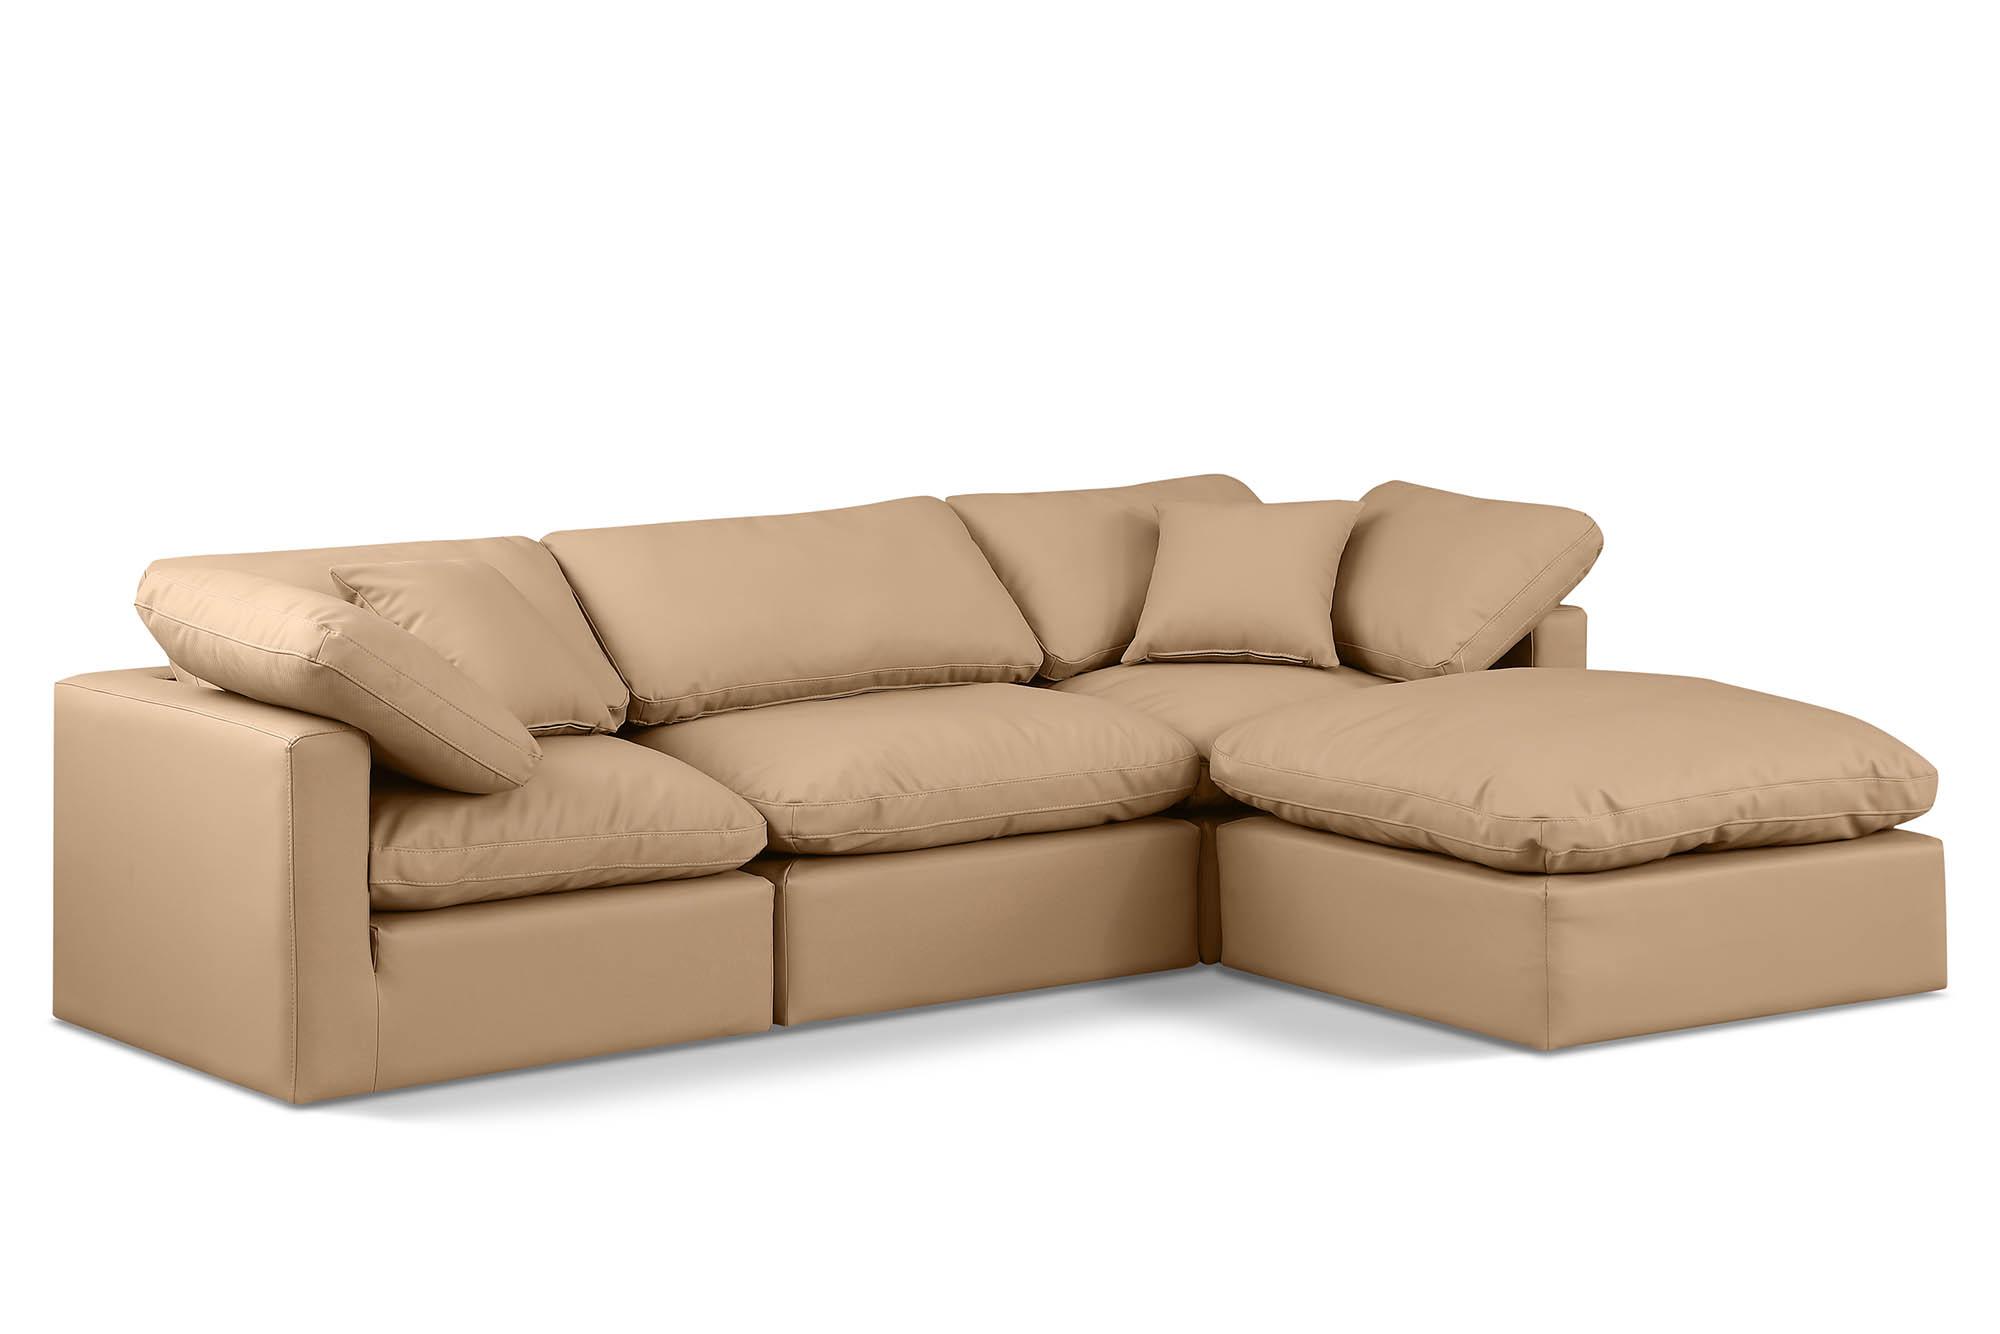 Contemporary, Modern Modular Sectional Sofa INDULGE 146Tan-Sec4A 146Tan-Sec4A in Tan Faux Leather